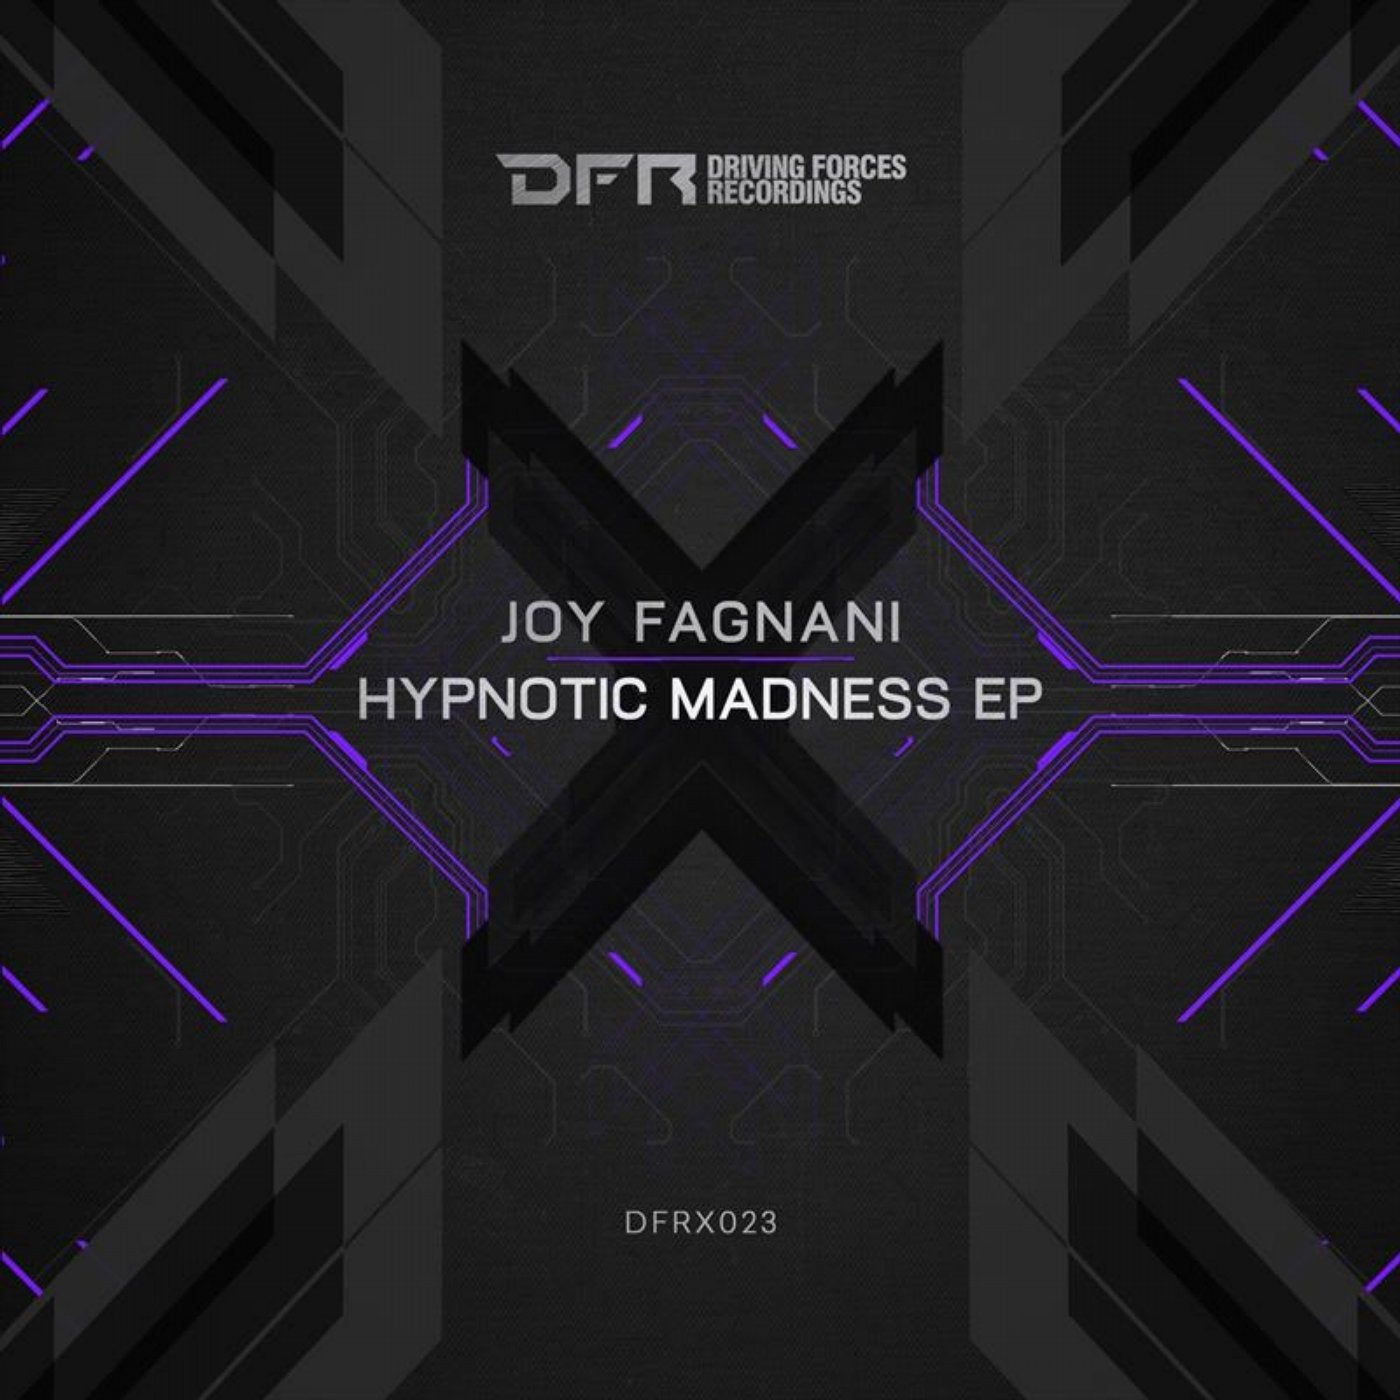 Hypnotic Madness EP